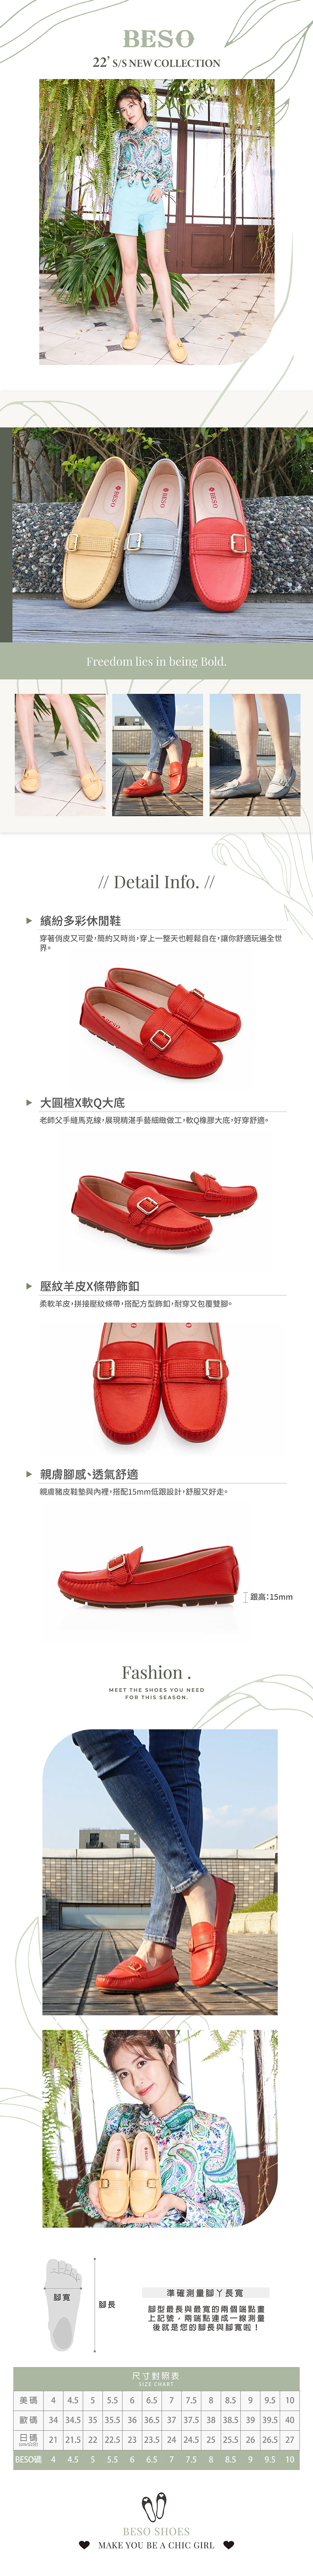 BESO 柔軟羊皮壓紋條帶飾釦軟Q底休閒鞋-紅色-阿瘦官方購物網